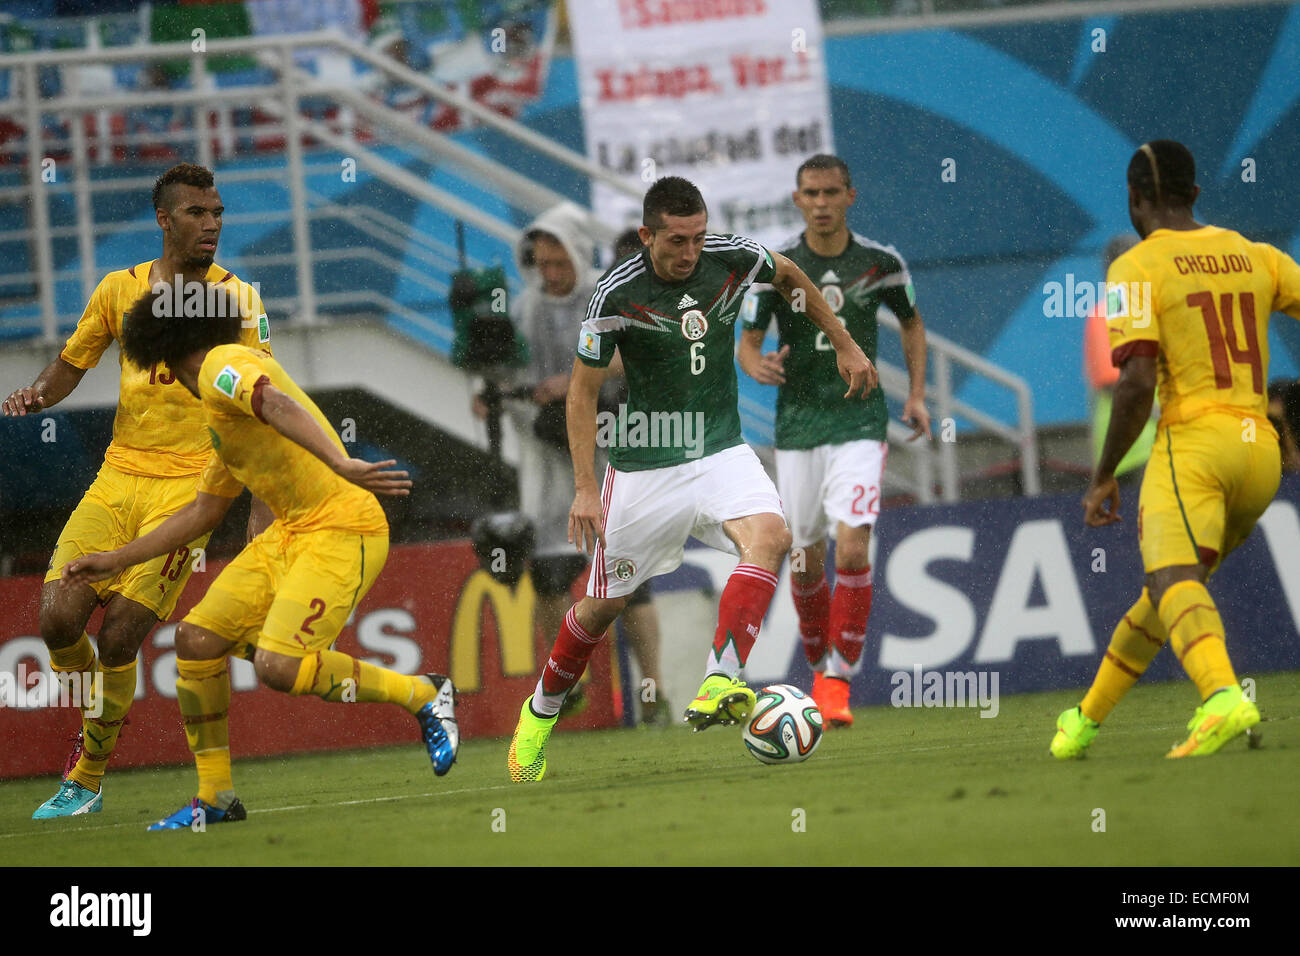 2014 FIFA World Cup - Group A match, Mexico 1 - 0 Cameroon, held at Estadio das Dunas, Natal  Featuring: Hector Herrera Where: Natal, RN, Brazil When: 13 Jun 2014 Stock Photo